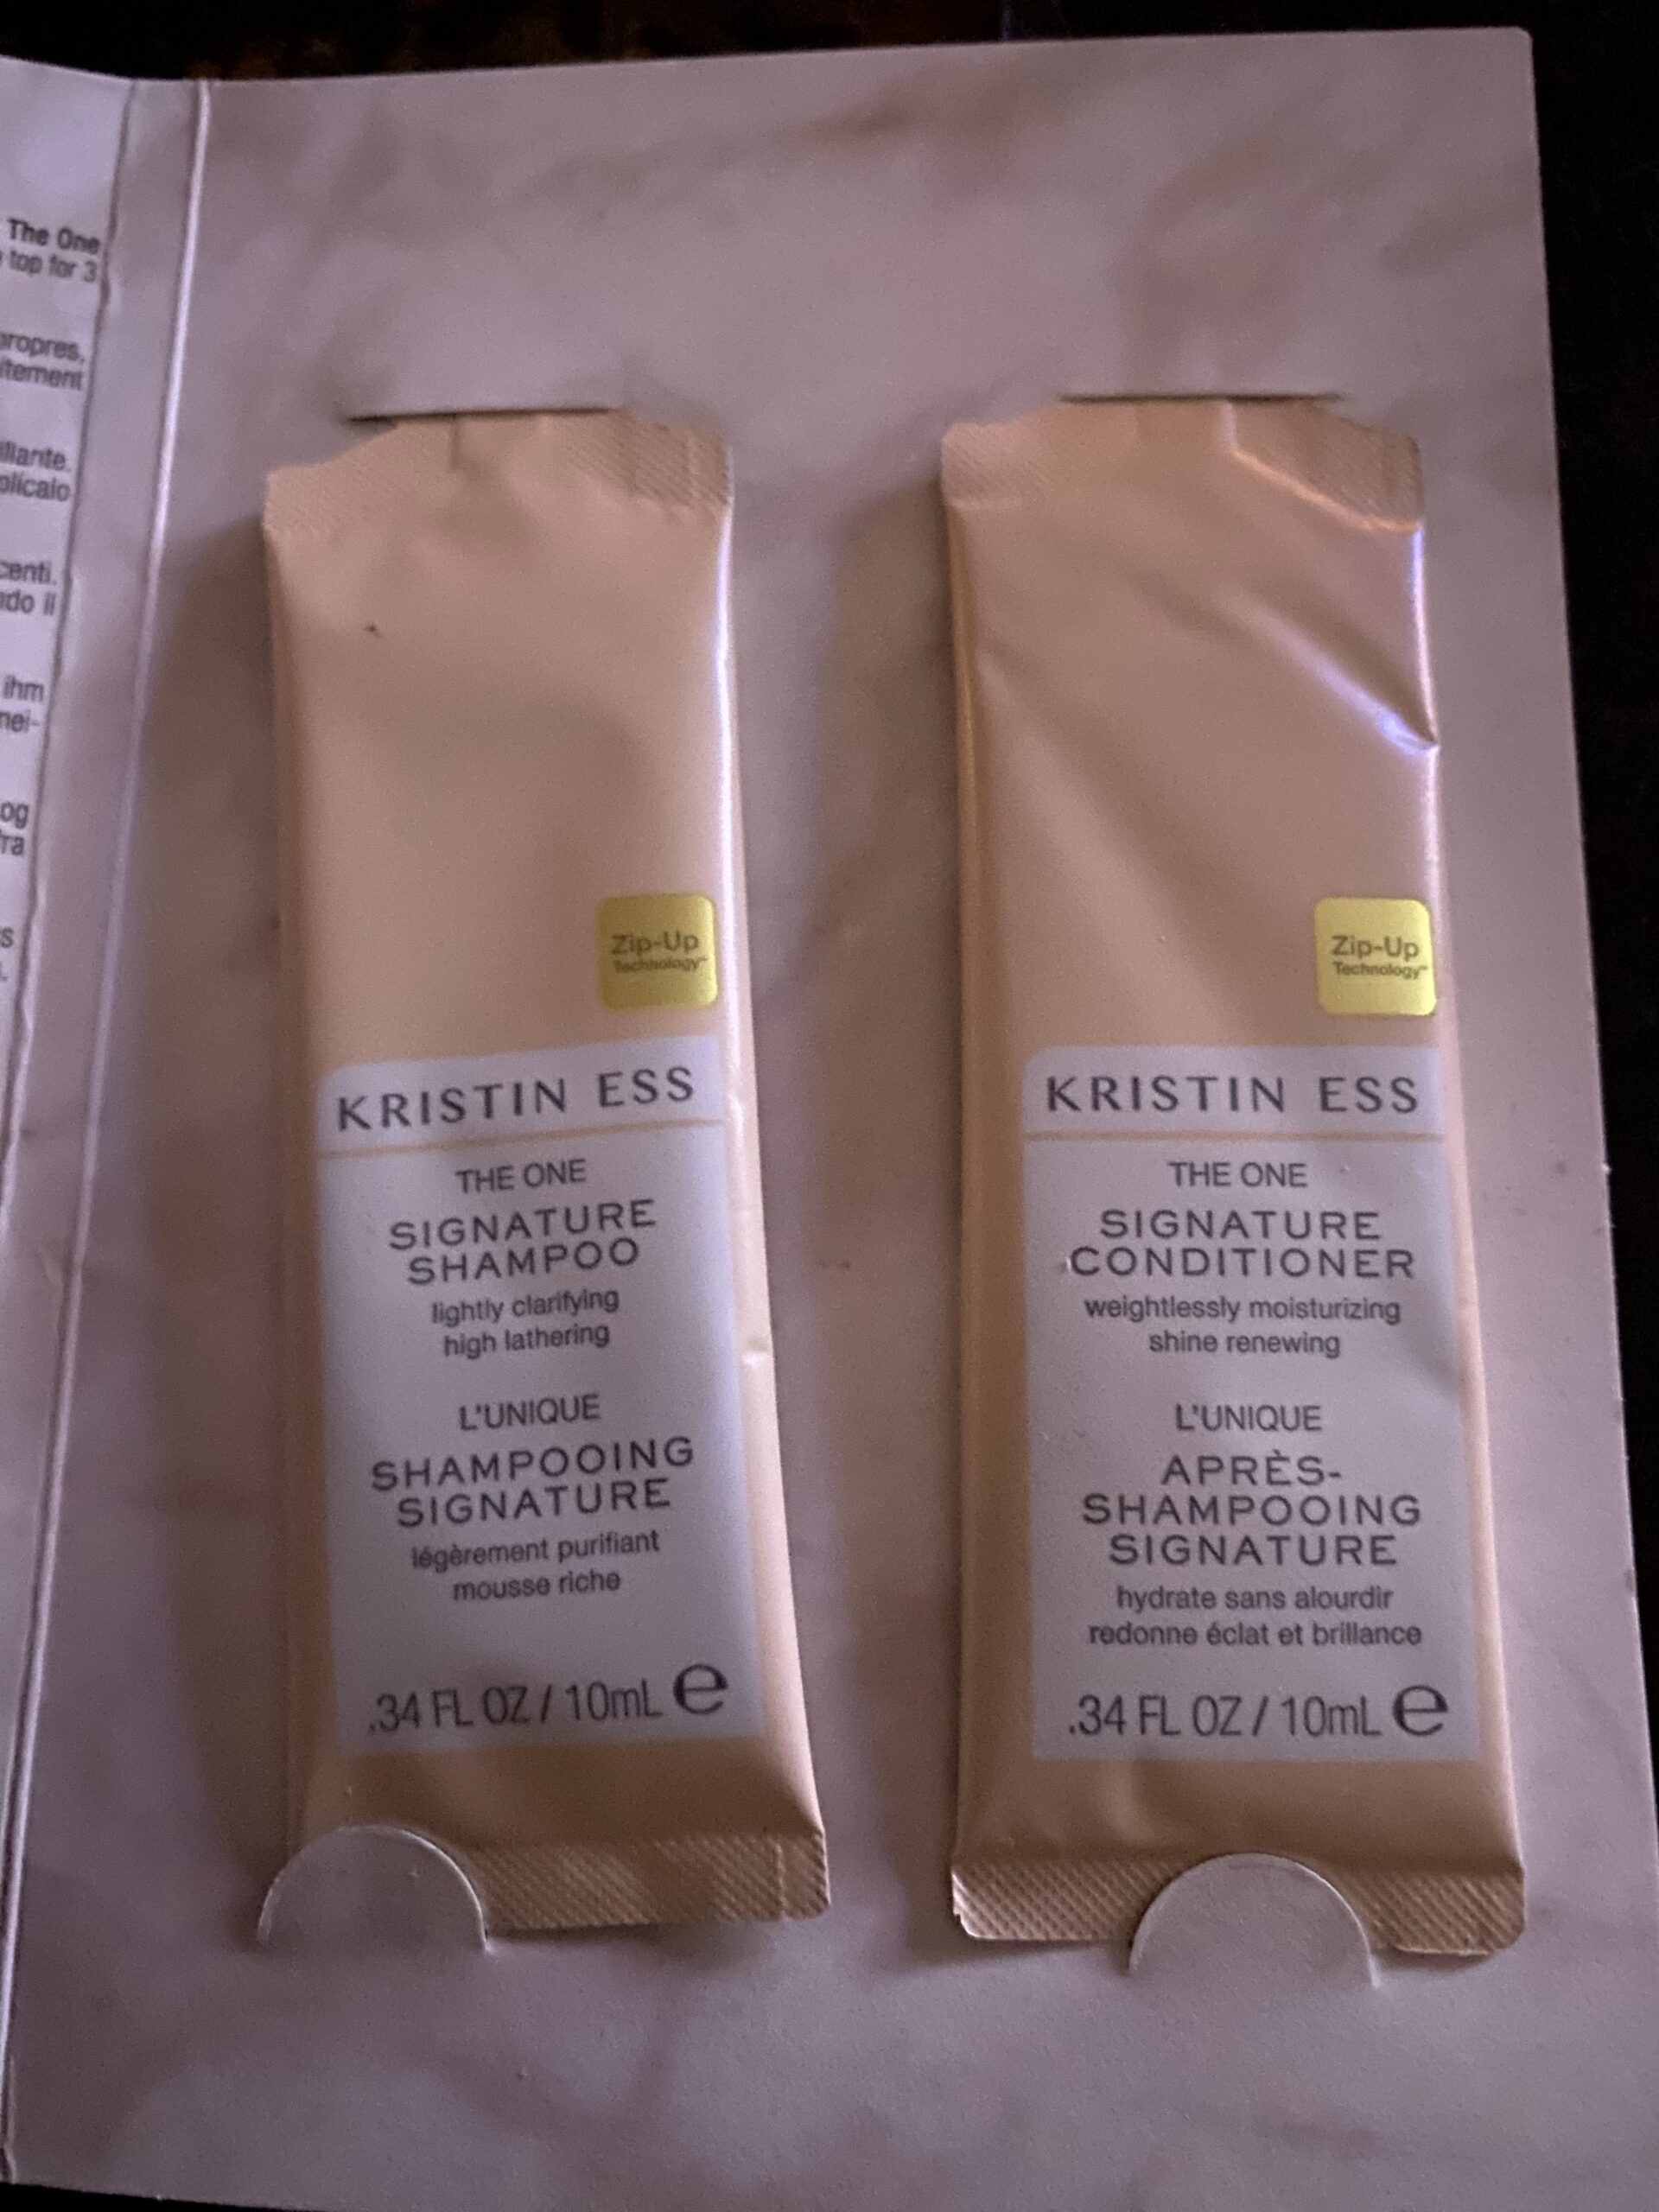 Kristin Ess signature shampoo & conditioner